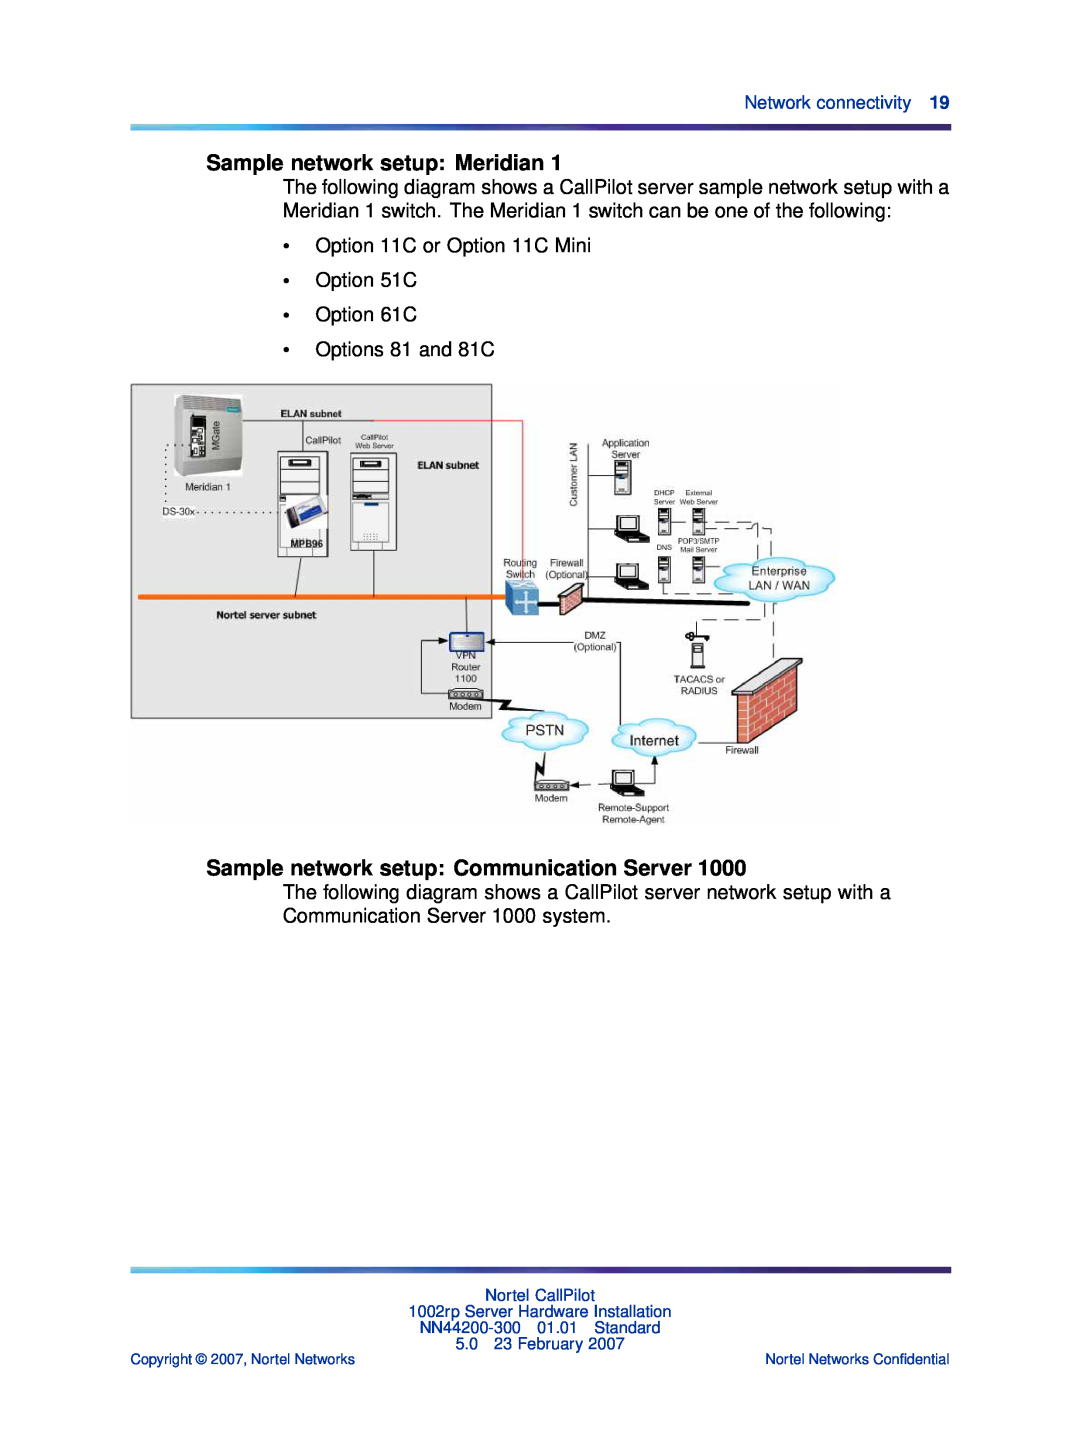 Nortel Networks NN44200-300 manual Sample network setup Meridian, Sample network setup Communication Server 